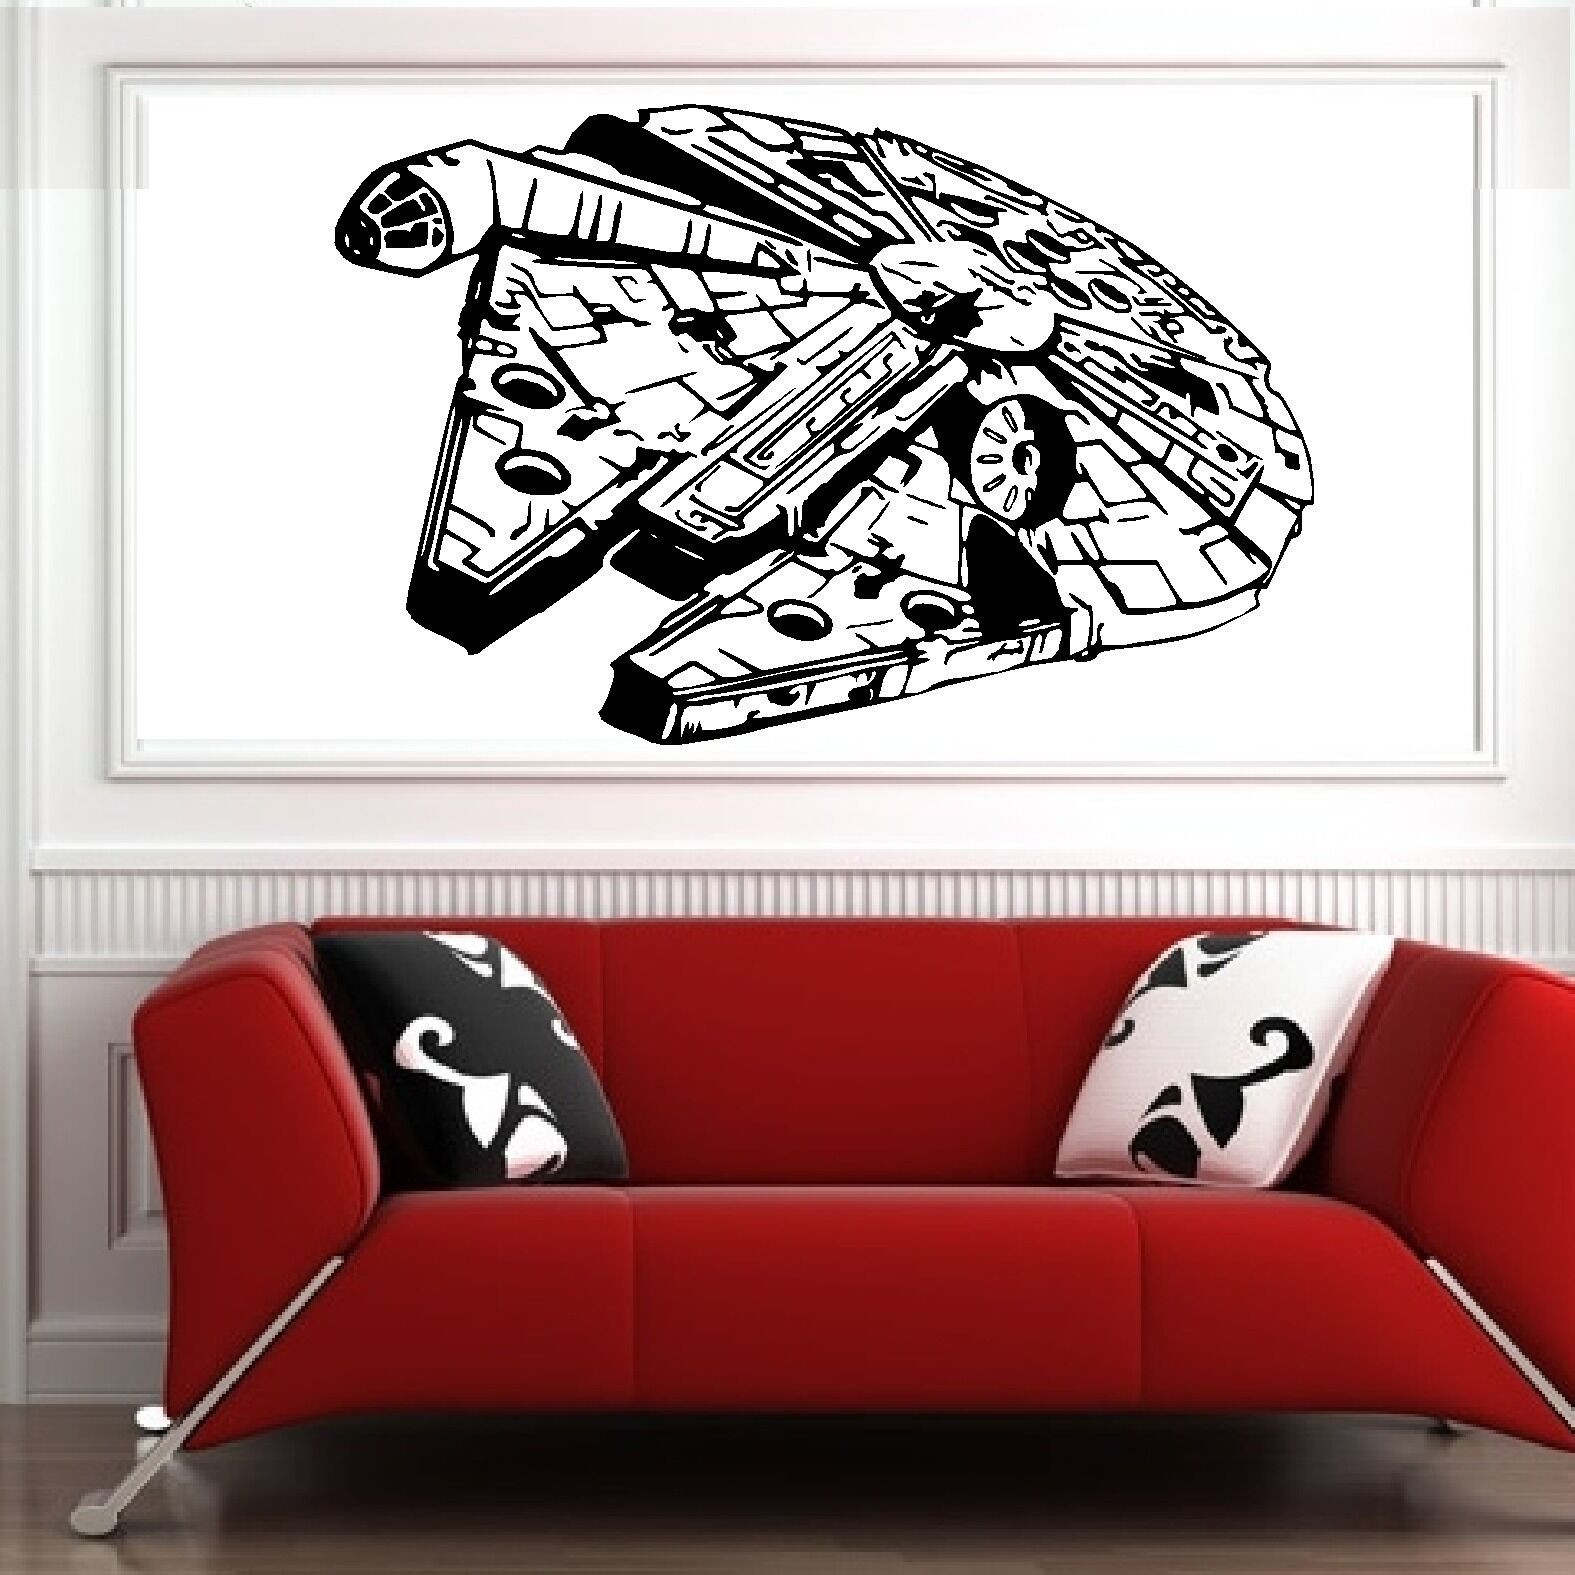 Best ideas about Star Wars Wall Art
. Save or Pin MILLENIUM FALCON STAR WARS vinyl wall art decal sticker Now.